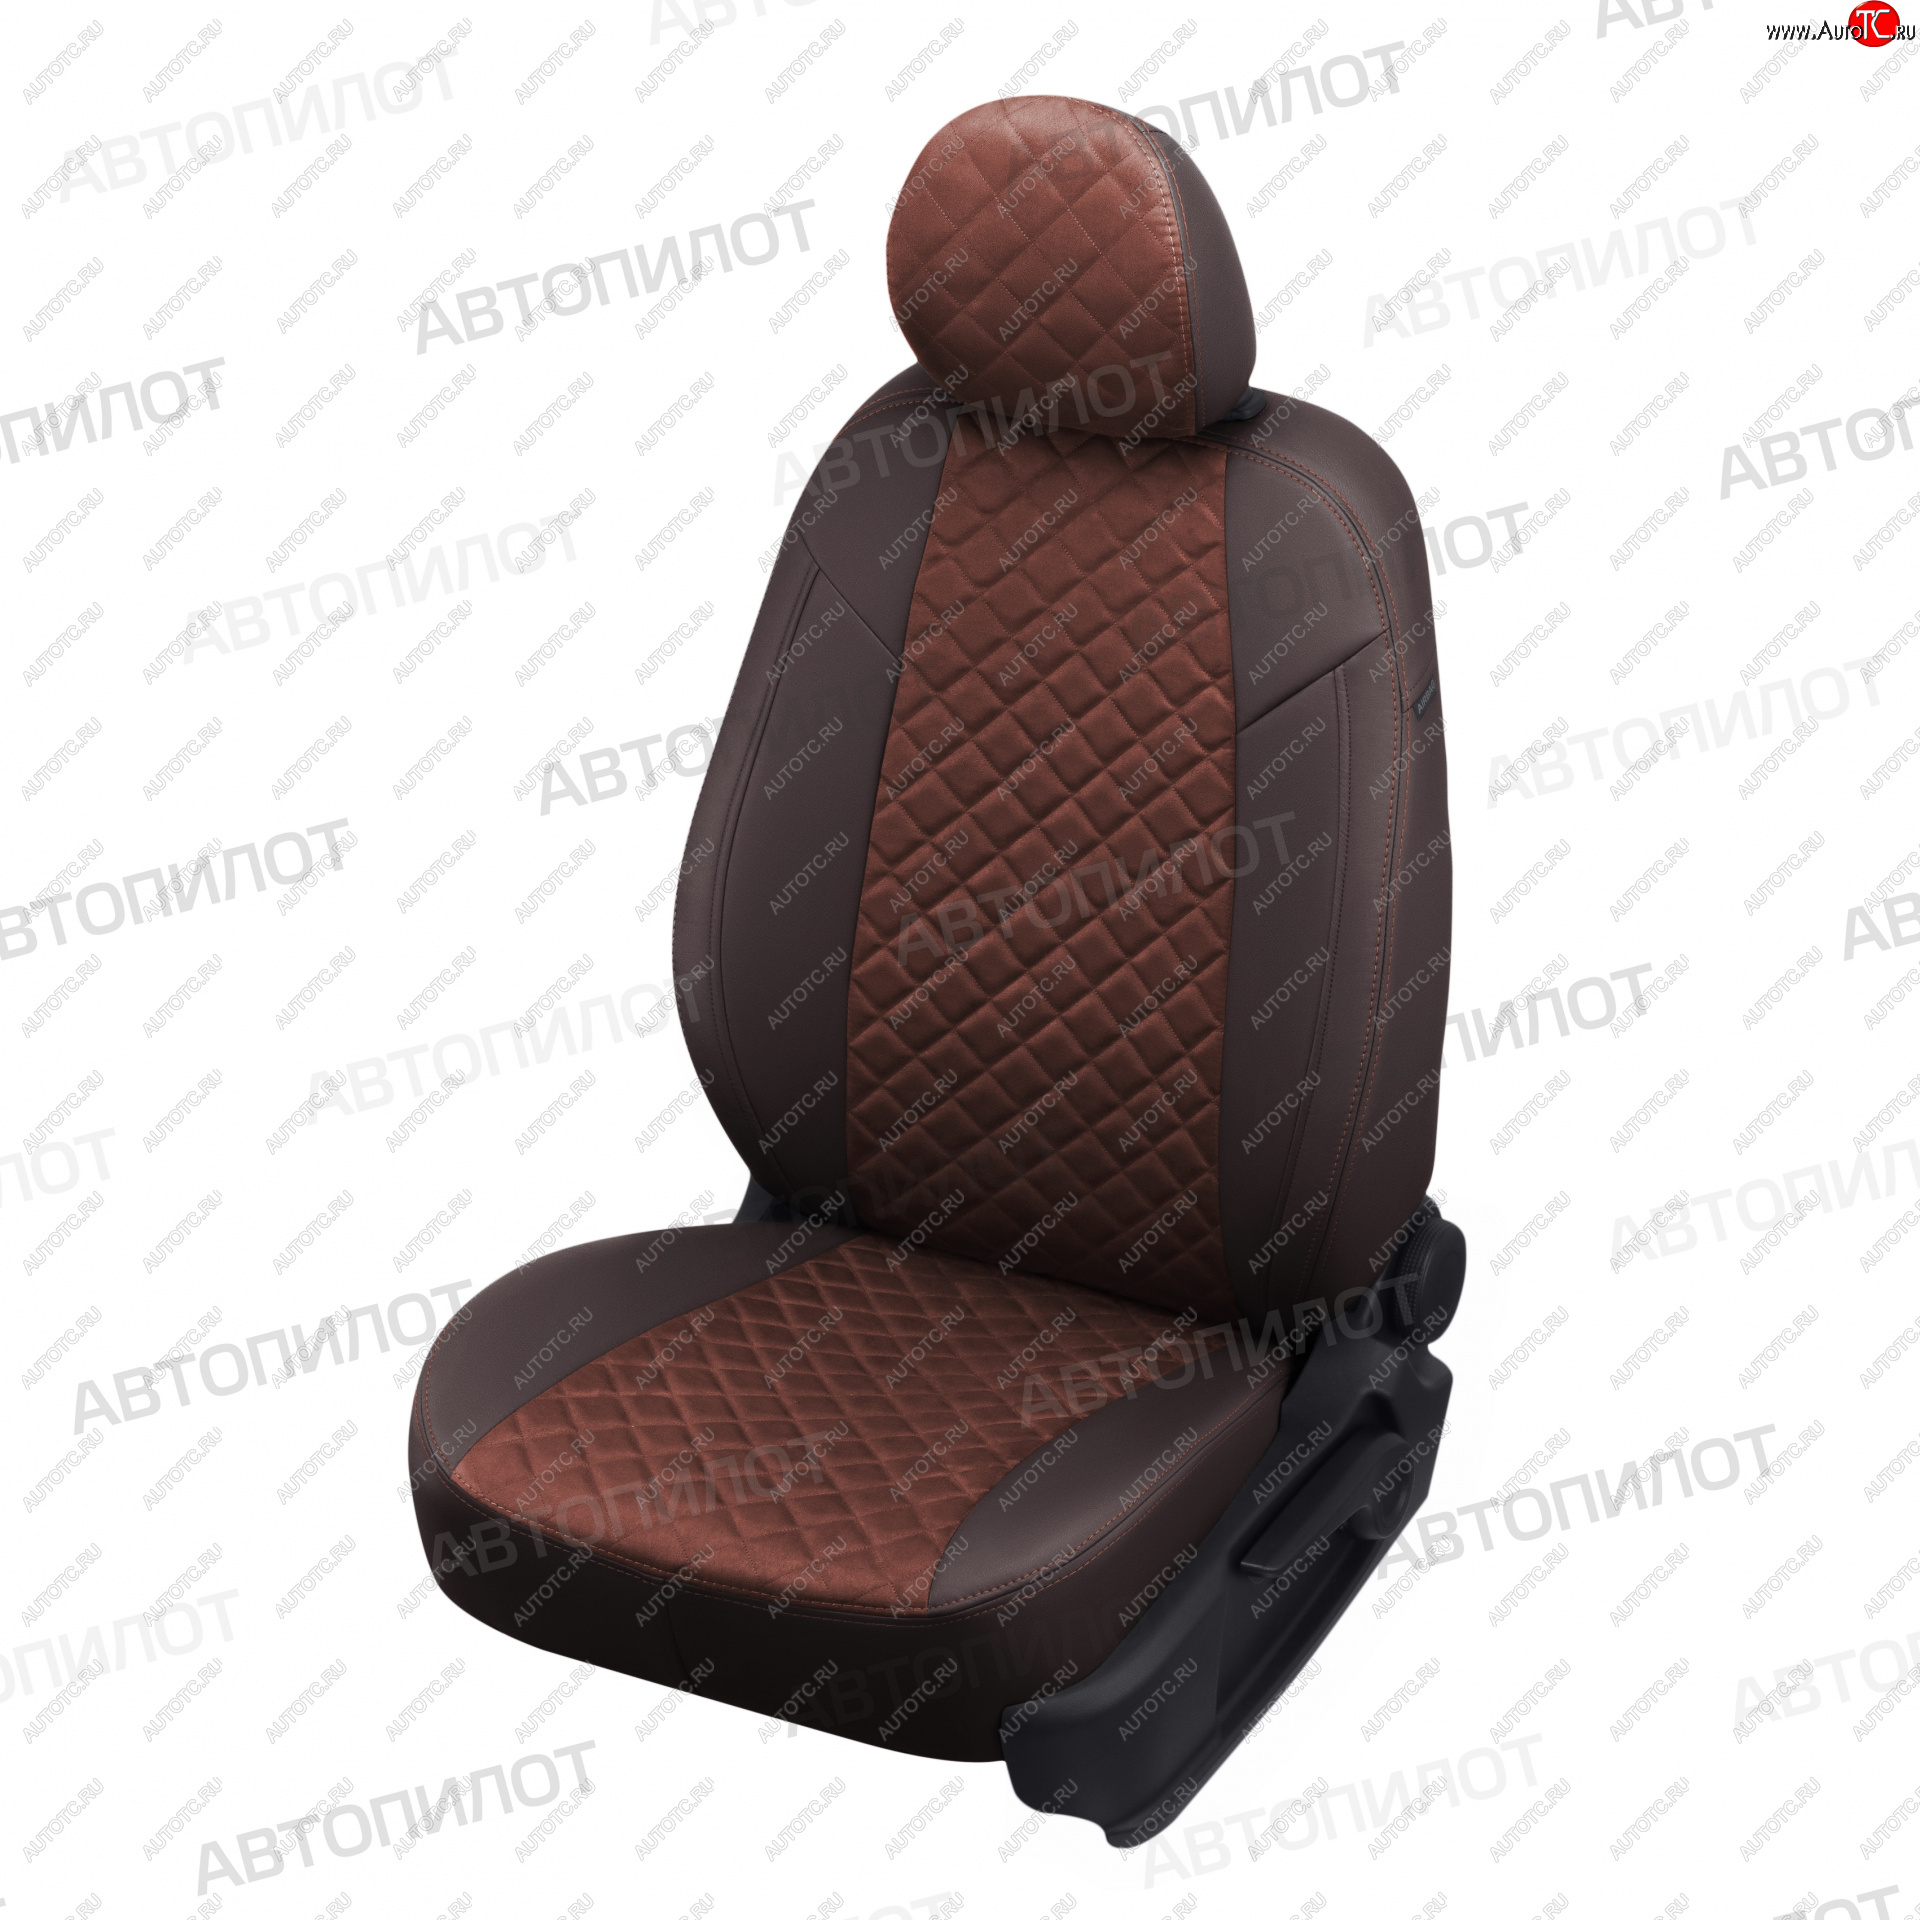 14 499 р. Чехлы сидений (5 мест, экокожа/алькантара) Автопилот Ромб  Ford Galaxy  2 (2006-2015) (шоколад)